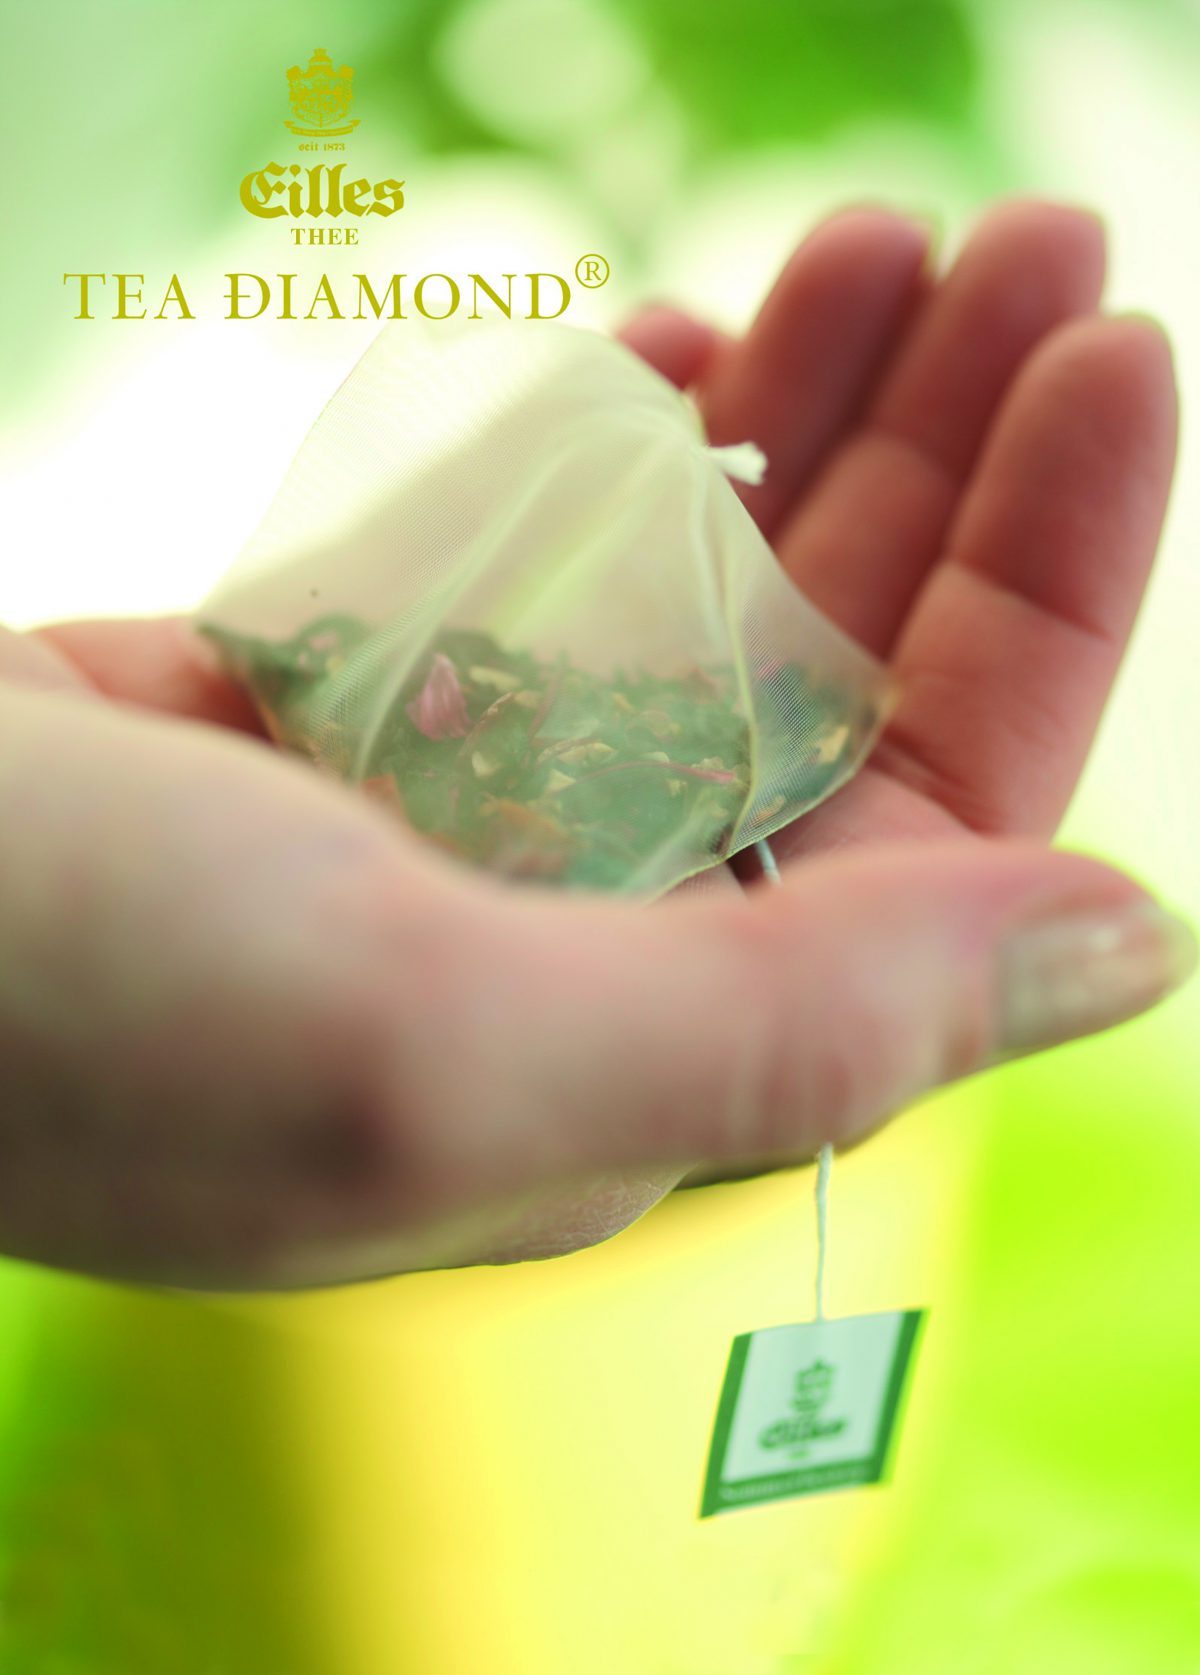 Tea diamonds